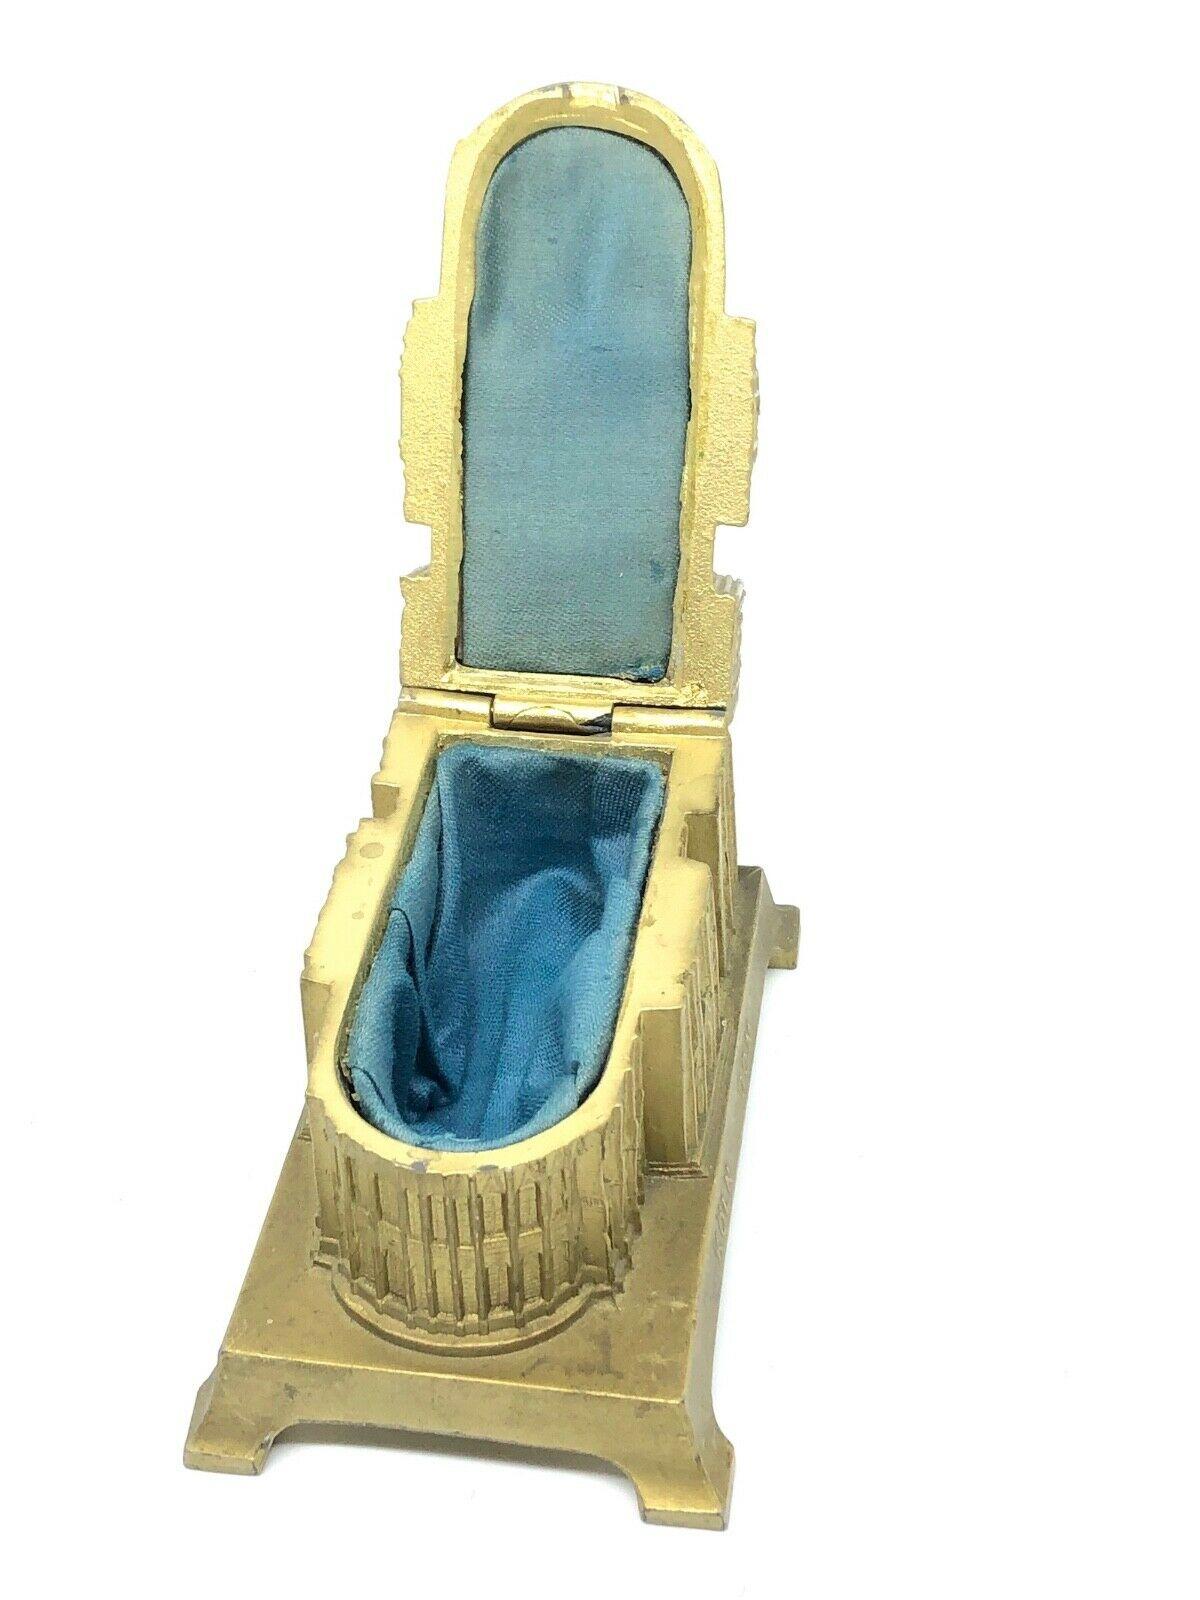 1930s jewelry box